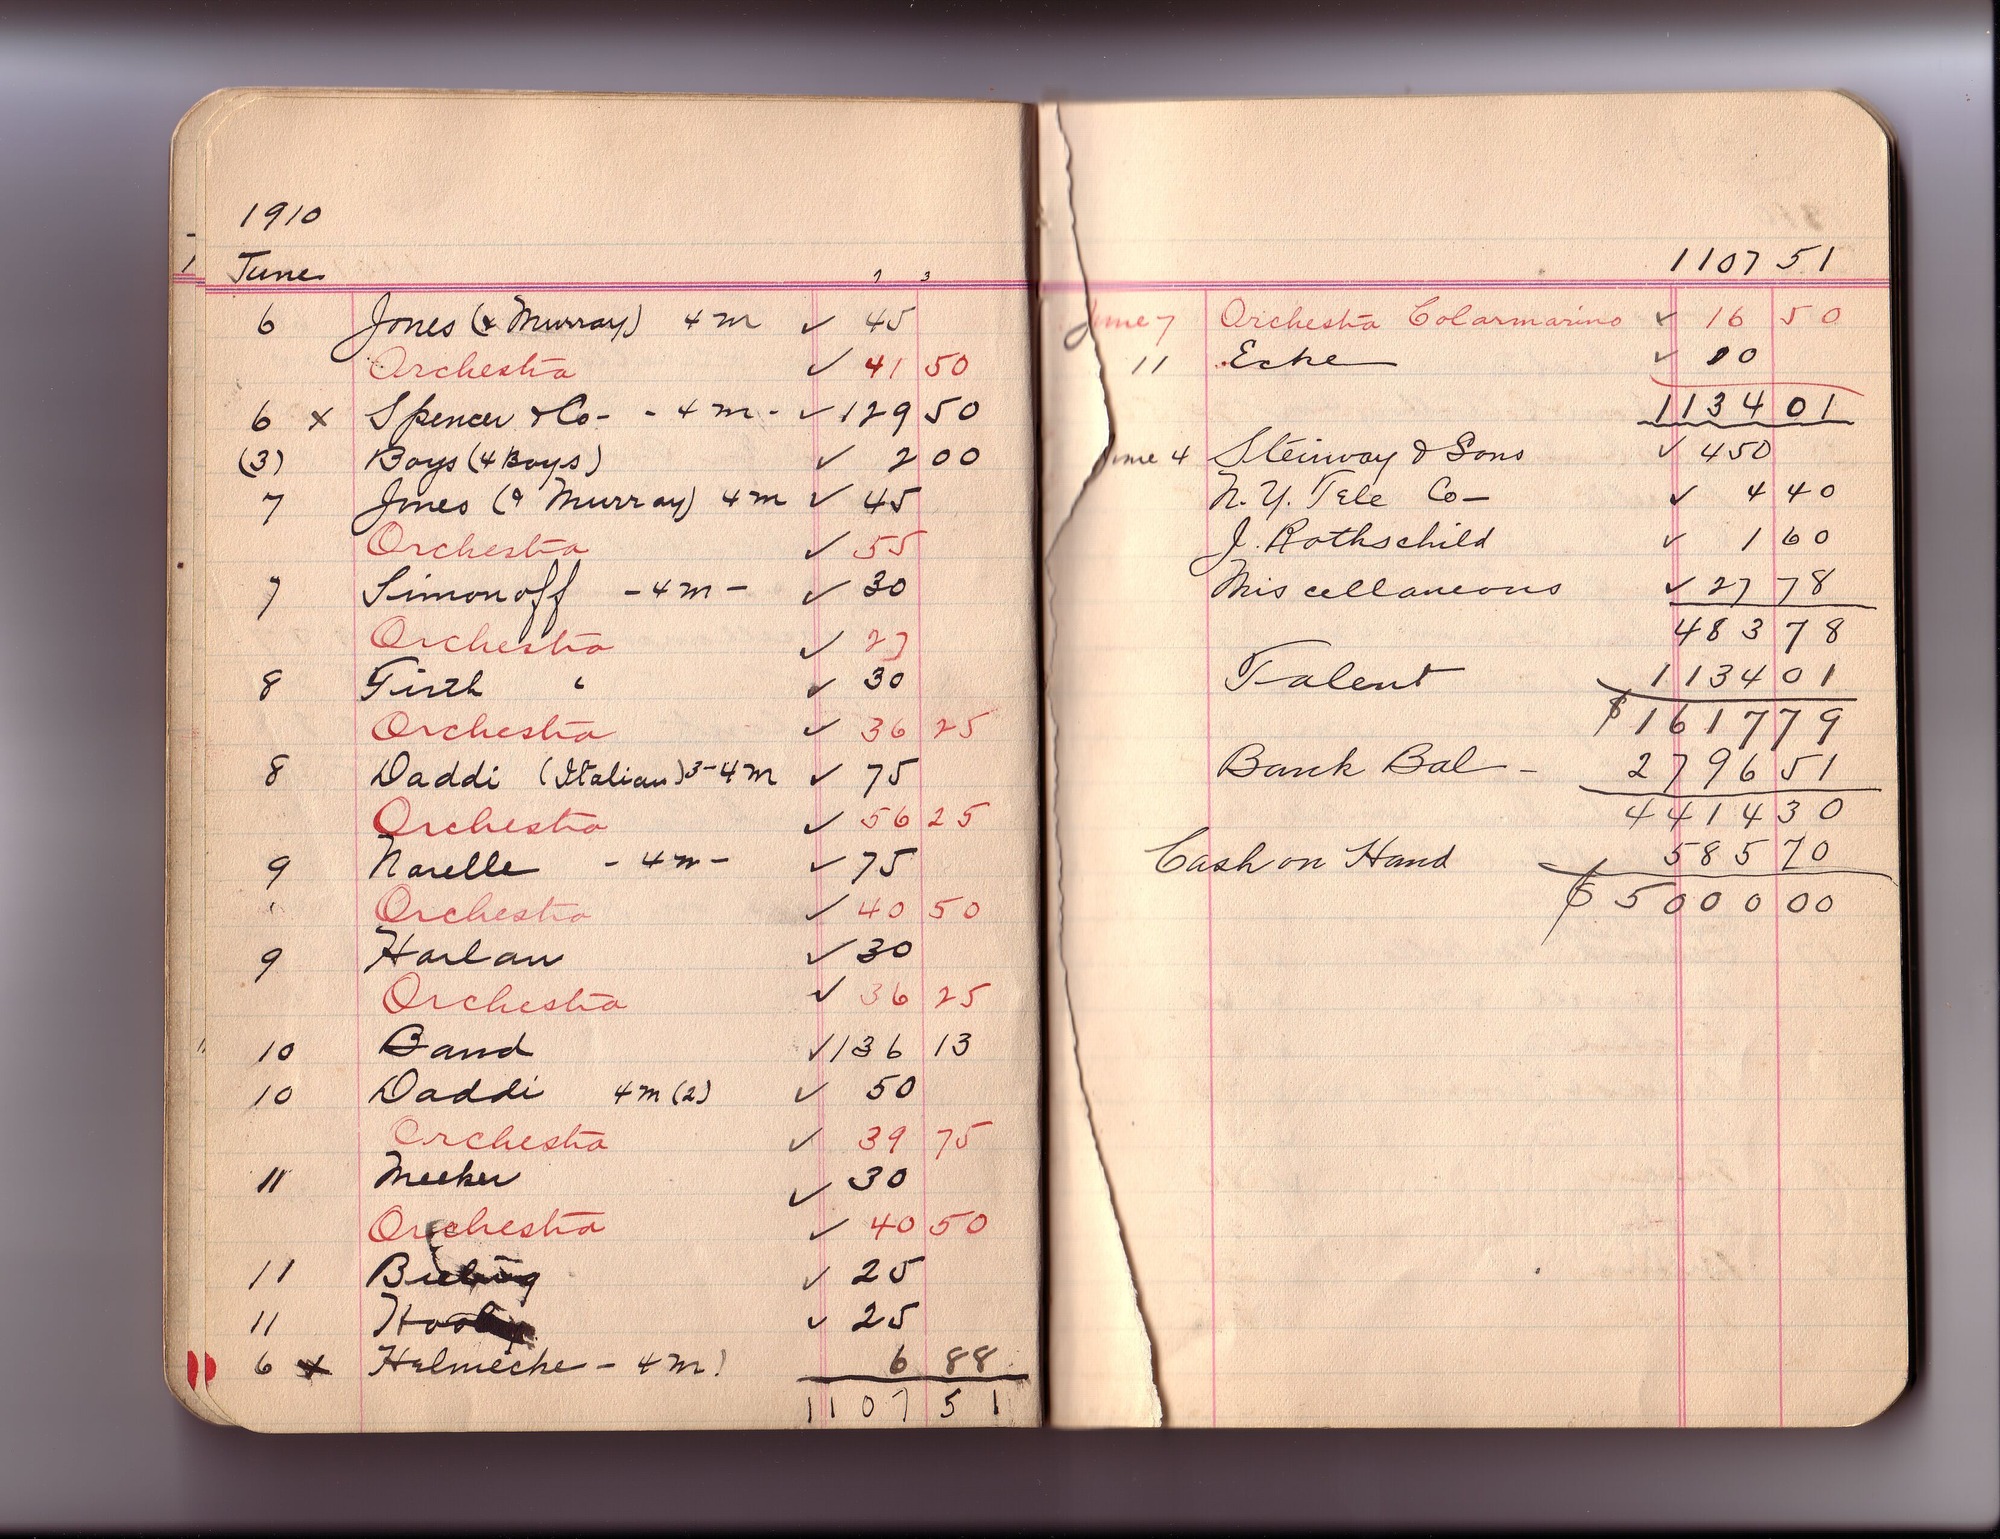 Thomas Edison's New York City Recording Studio Cash Book 06 (of 21), Image 14 (of 43).